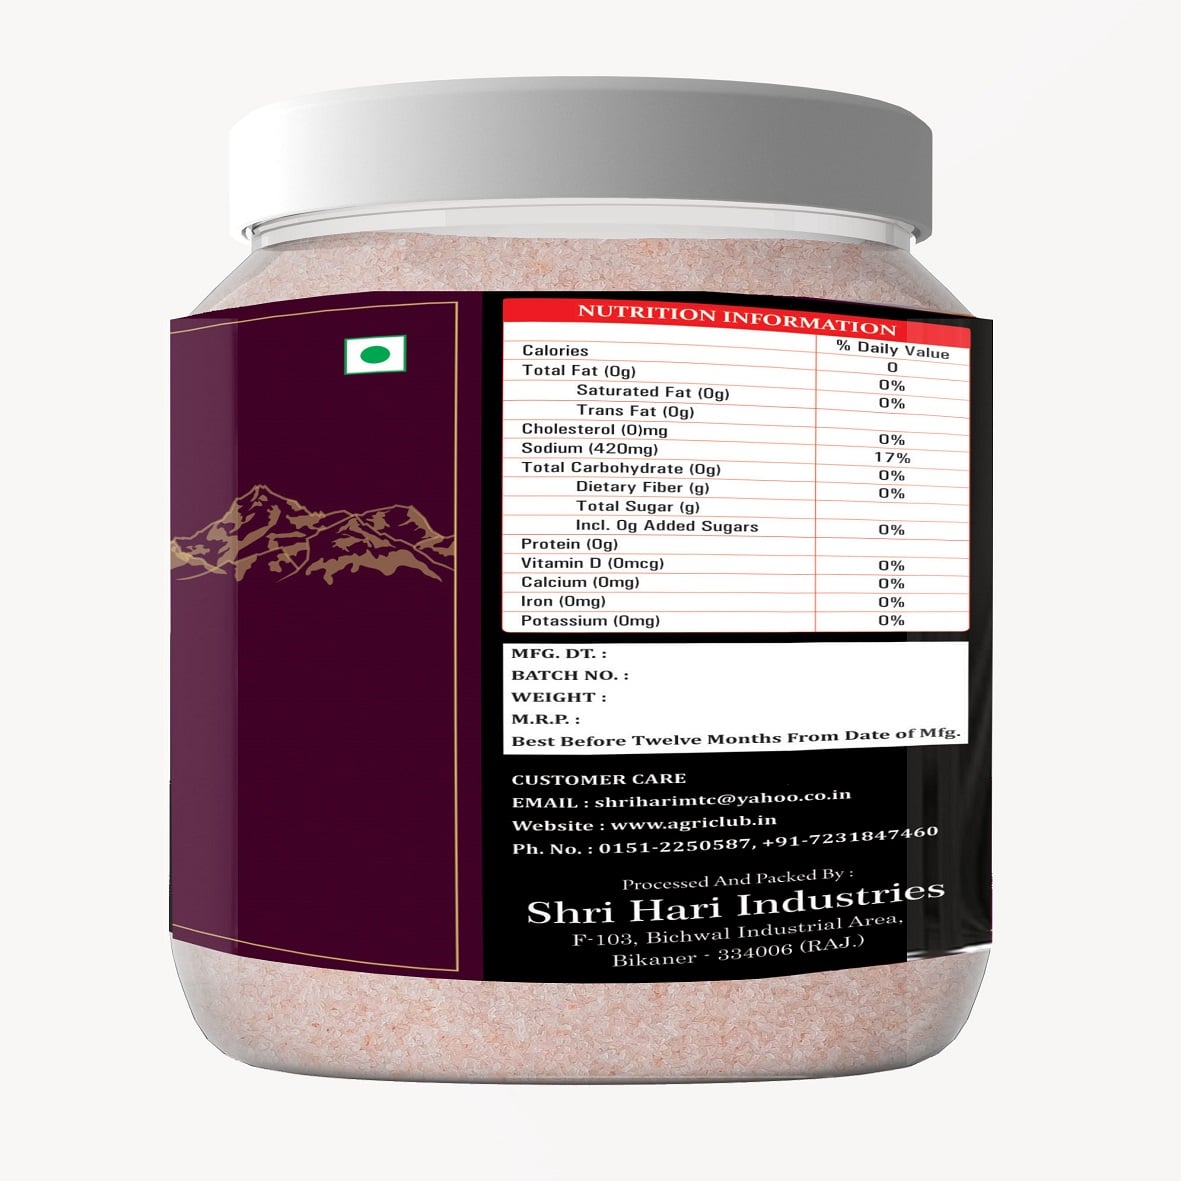 Himalayan Pink Salt Rawa 1Kg Premium Quality